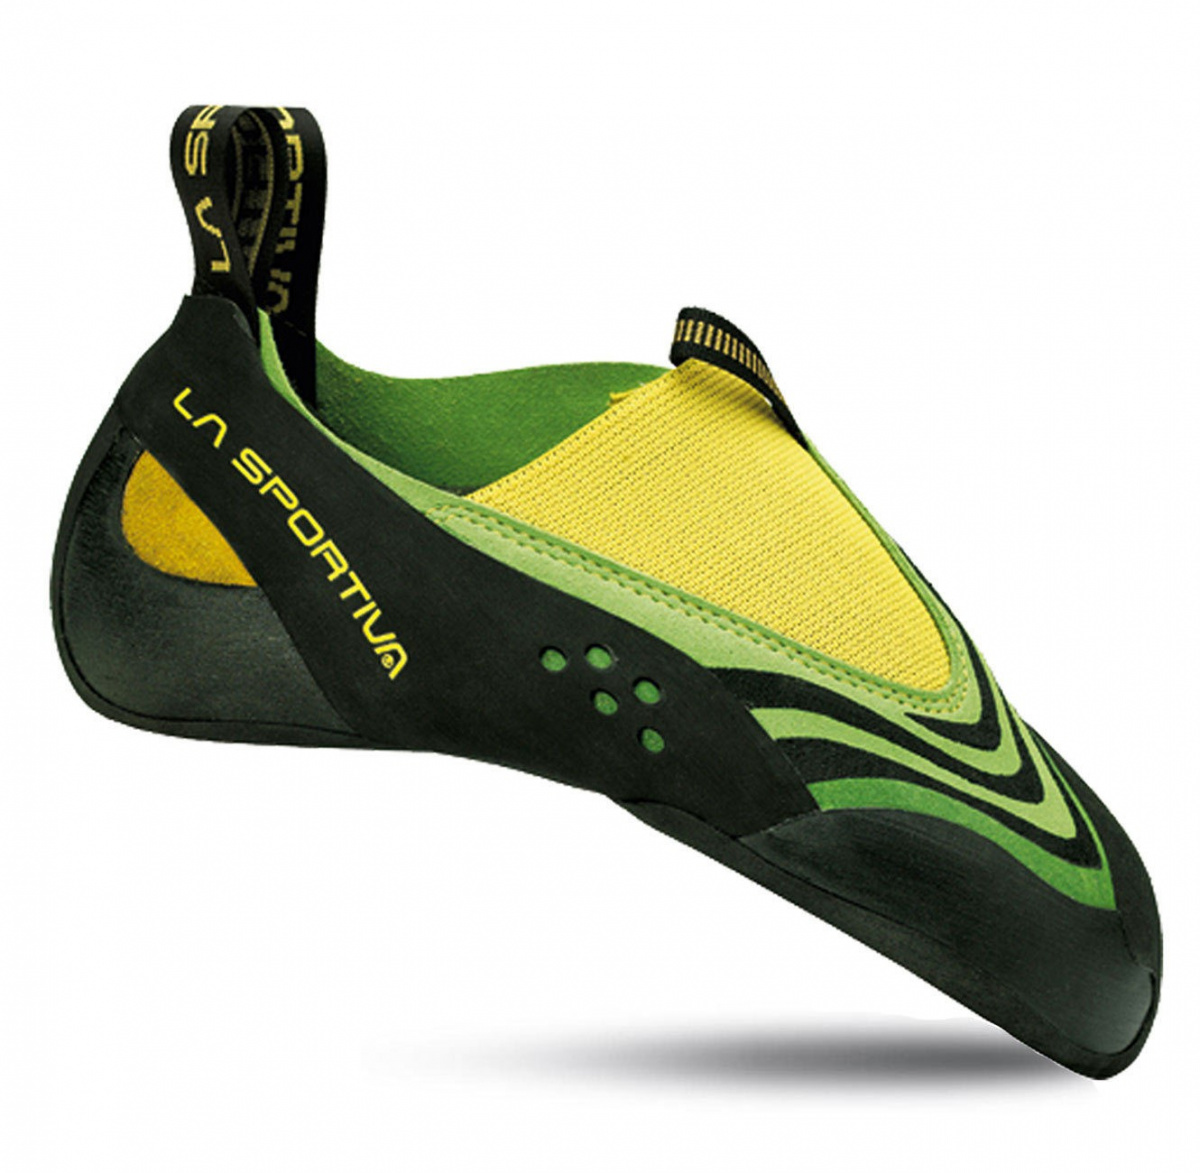 Lezečky La Sportiva Speedster green/yellow 36 EU